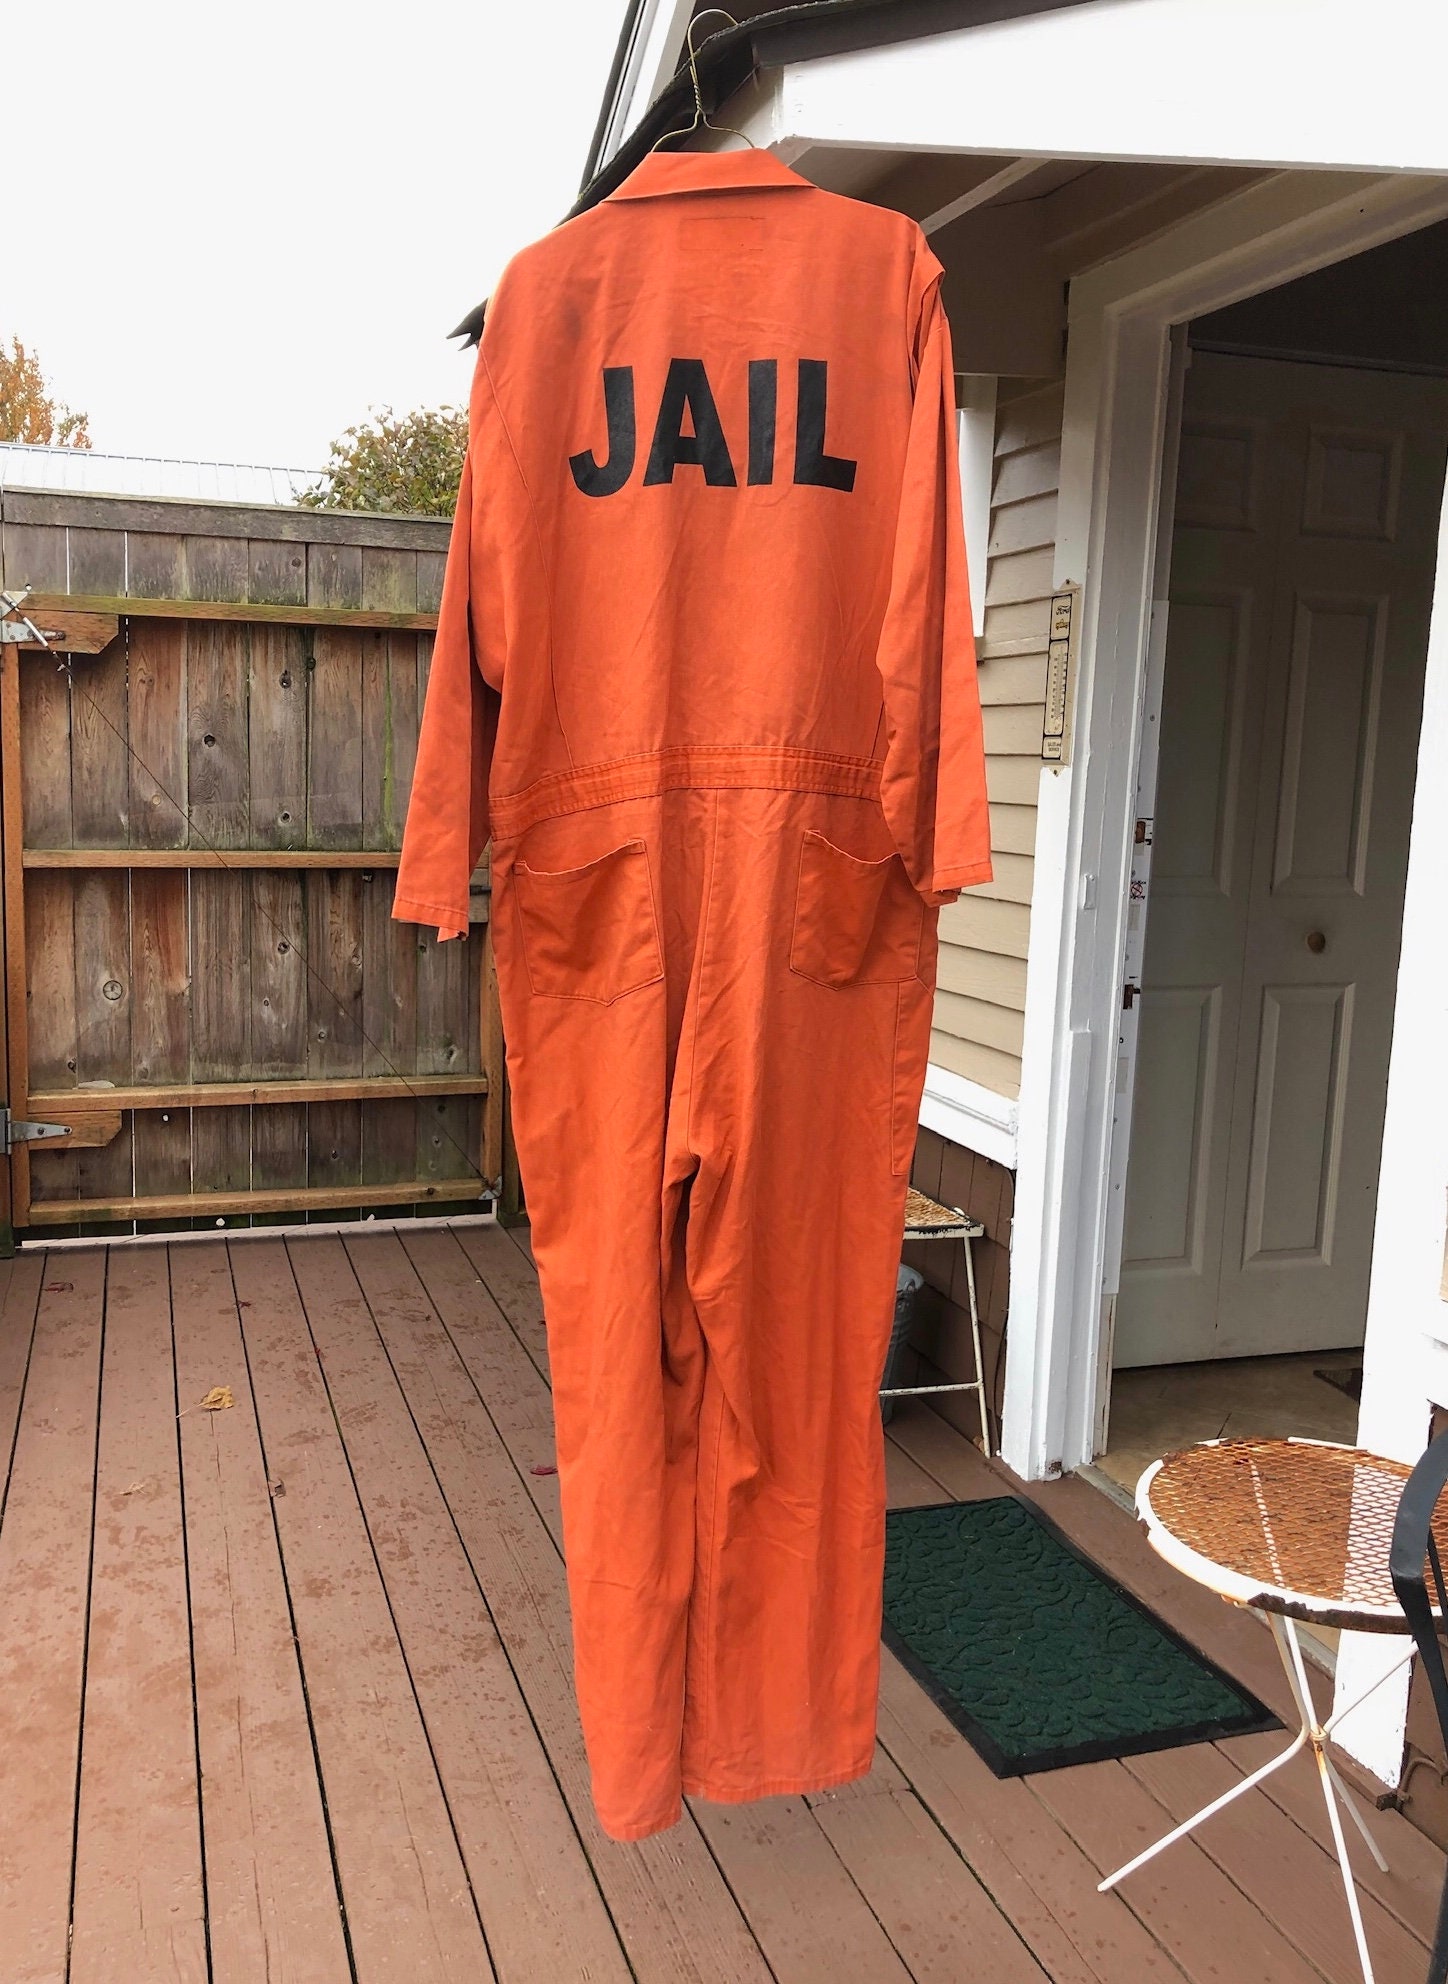 JOE BIDEN Jail Inmate Prisoner Orange Jumpsuit Costume Halloween HI QUALITY  | eBay